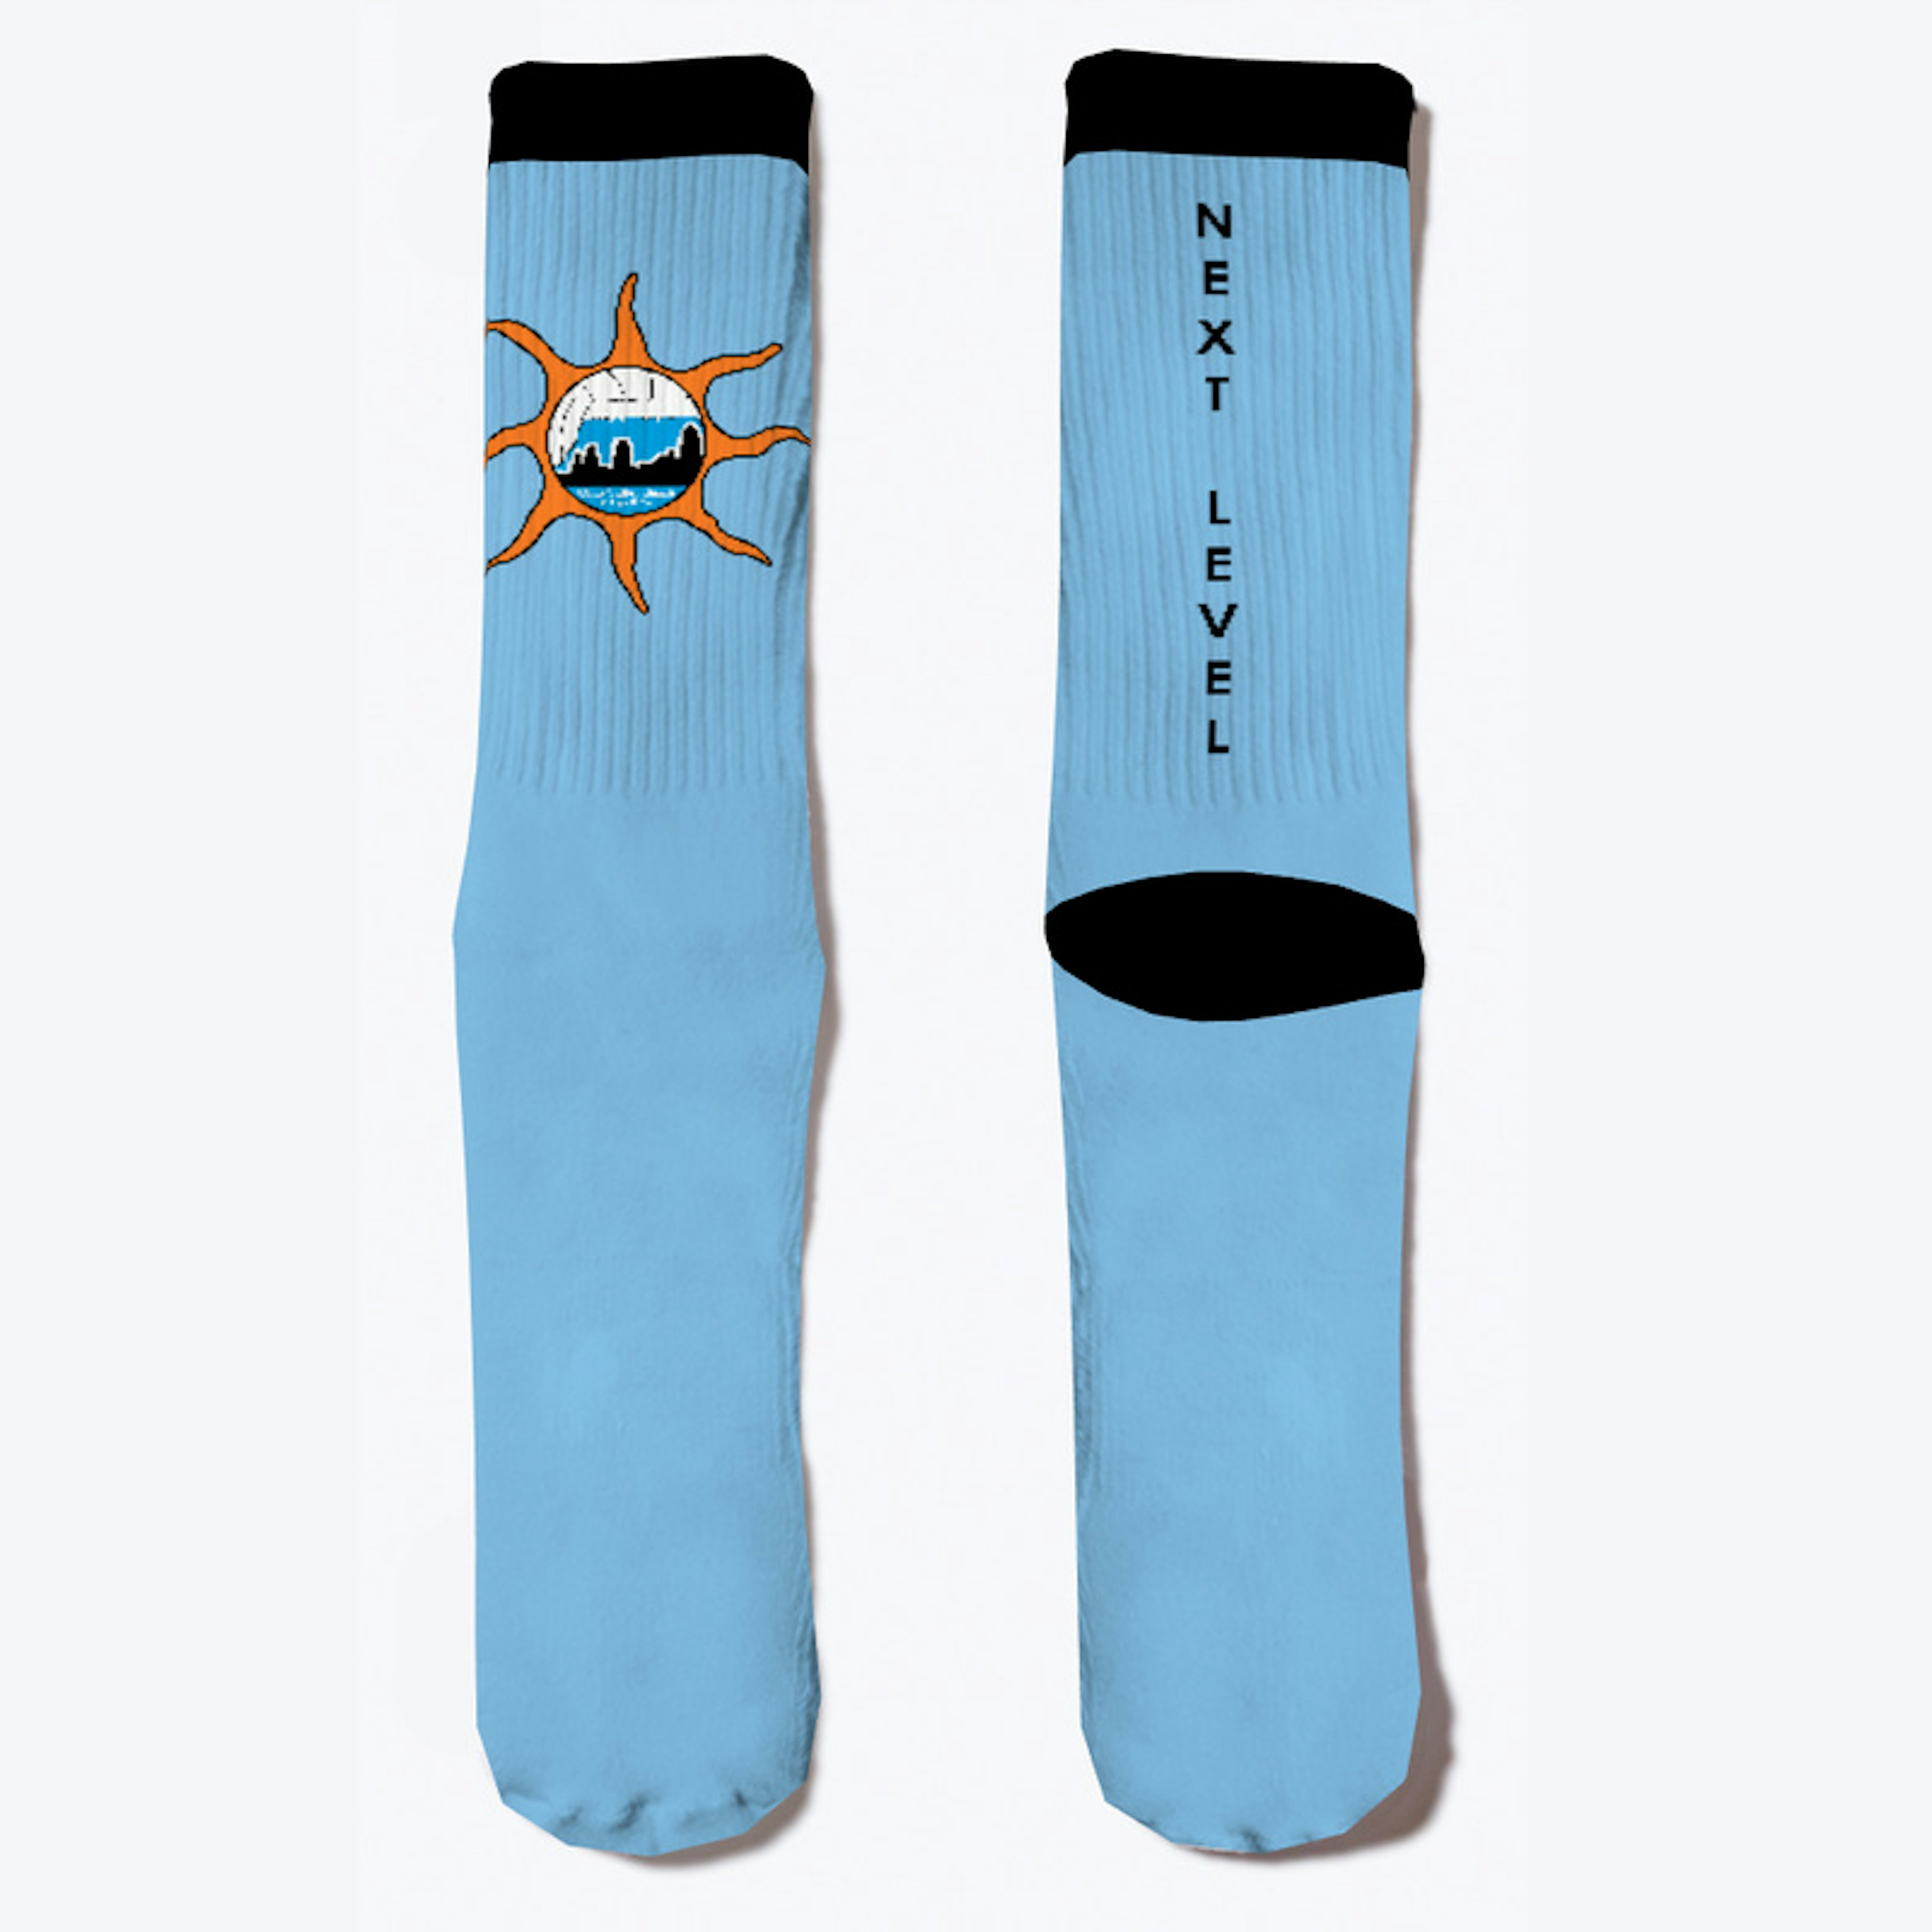 OVB - NEXT LEVEL Branded Socks